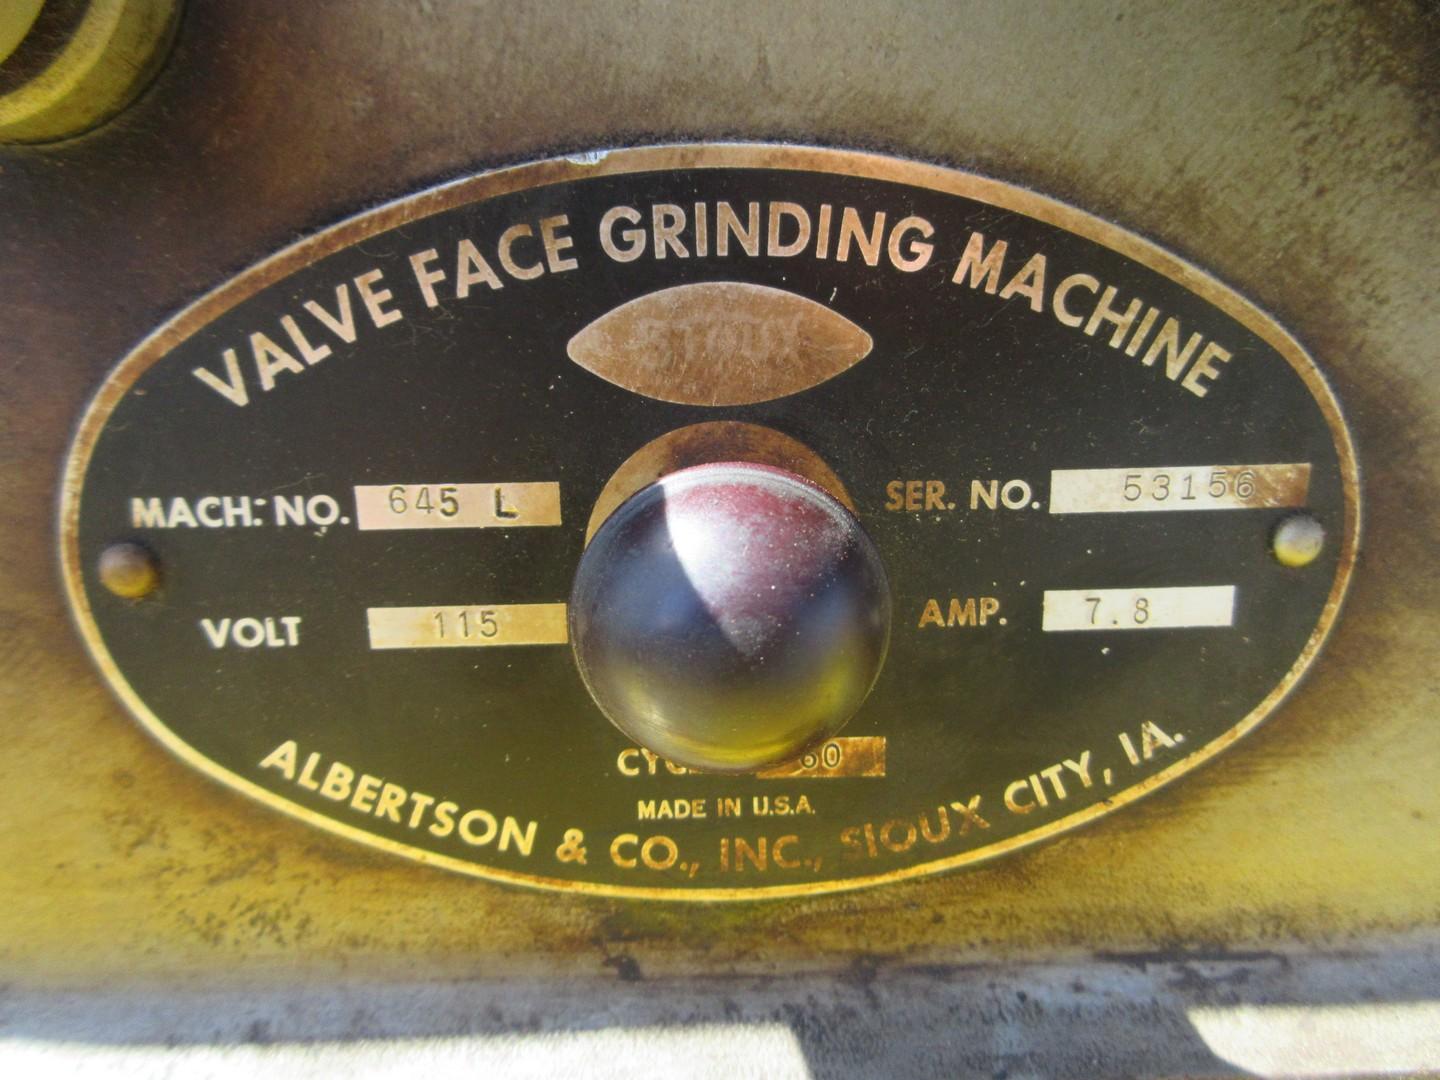 Sioux 645L Valve Face Grinding Machine